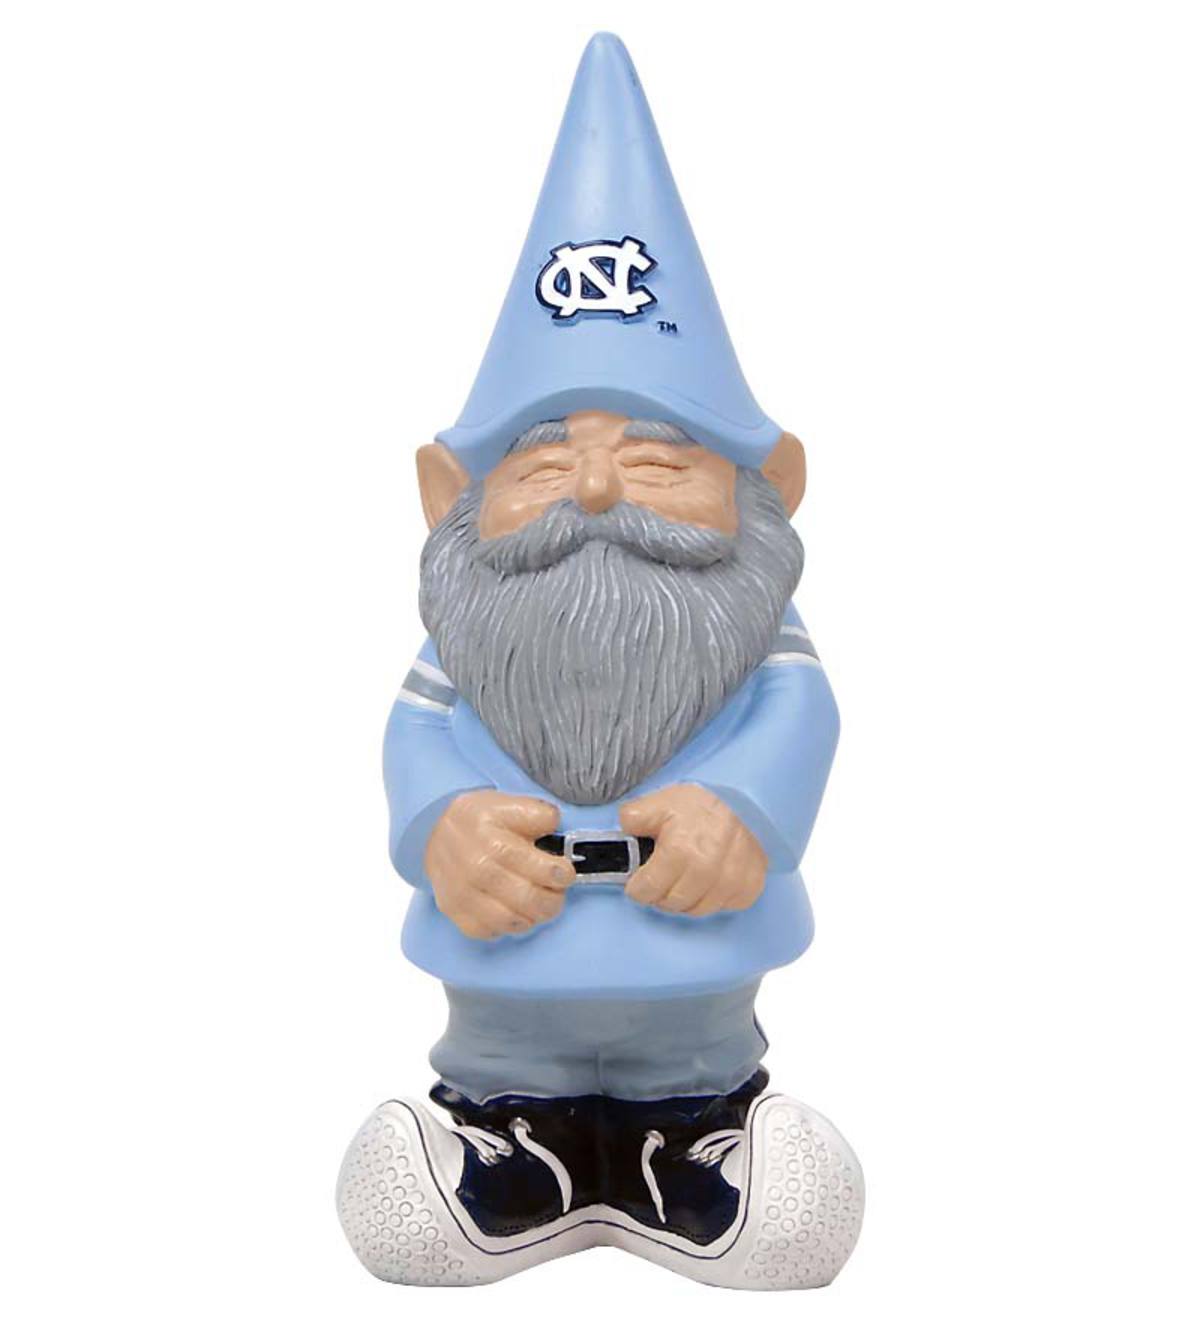 Collegiate Gnome - University of North Carolina